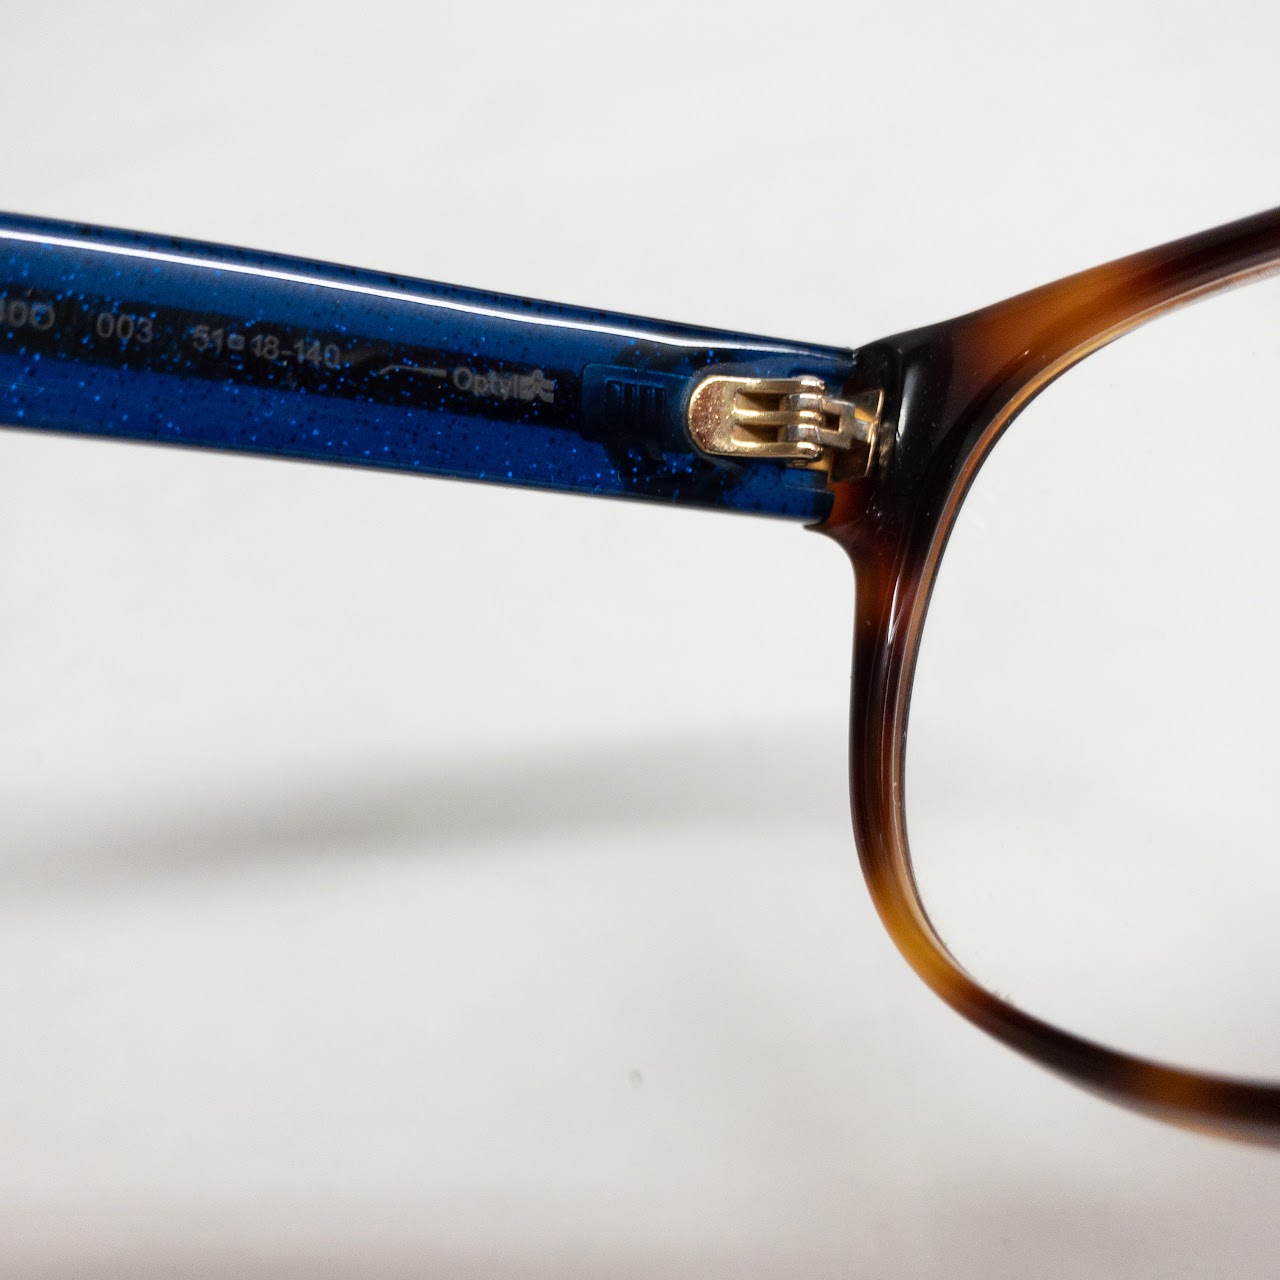 Gucci Faux Tortoiseshell Glitter RX Eyeglasses